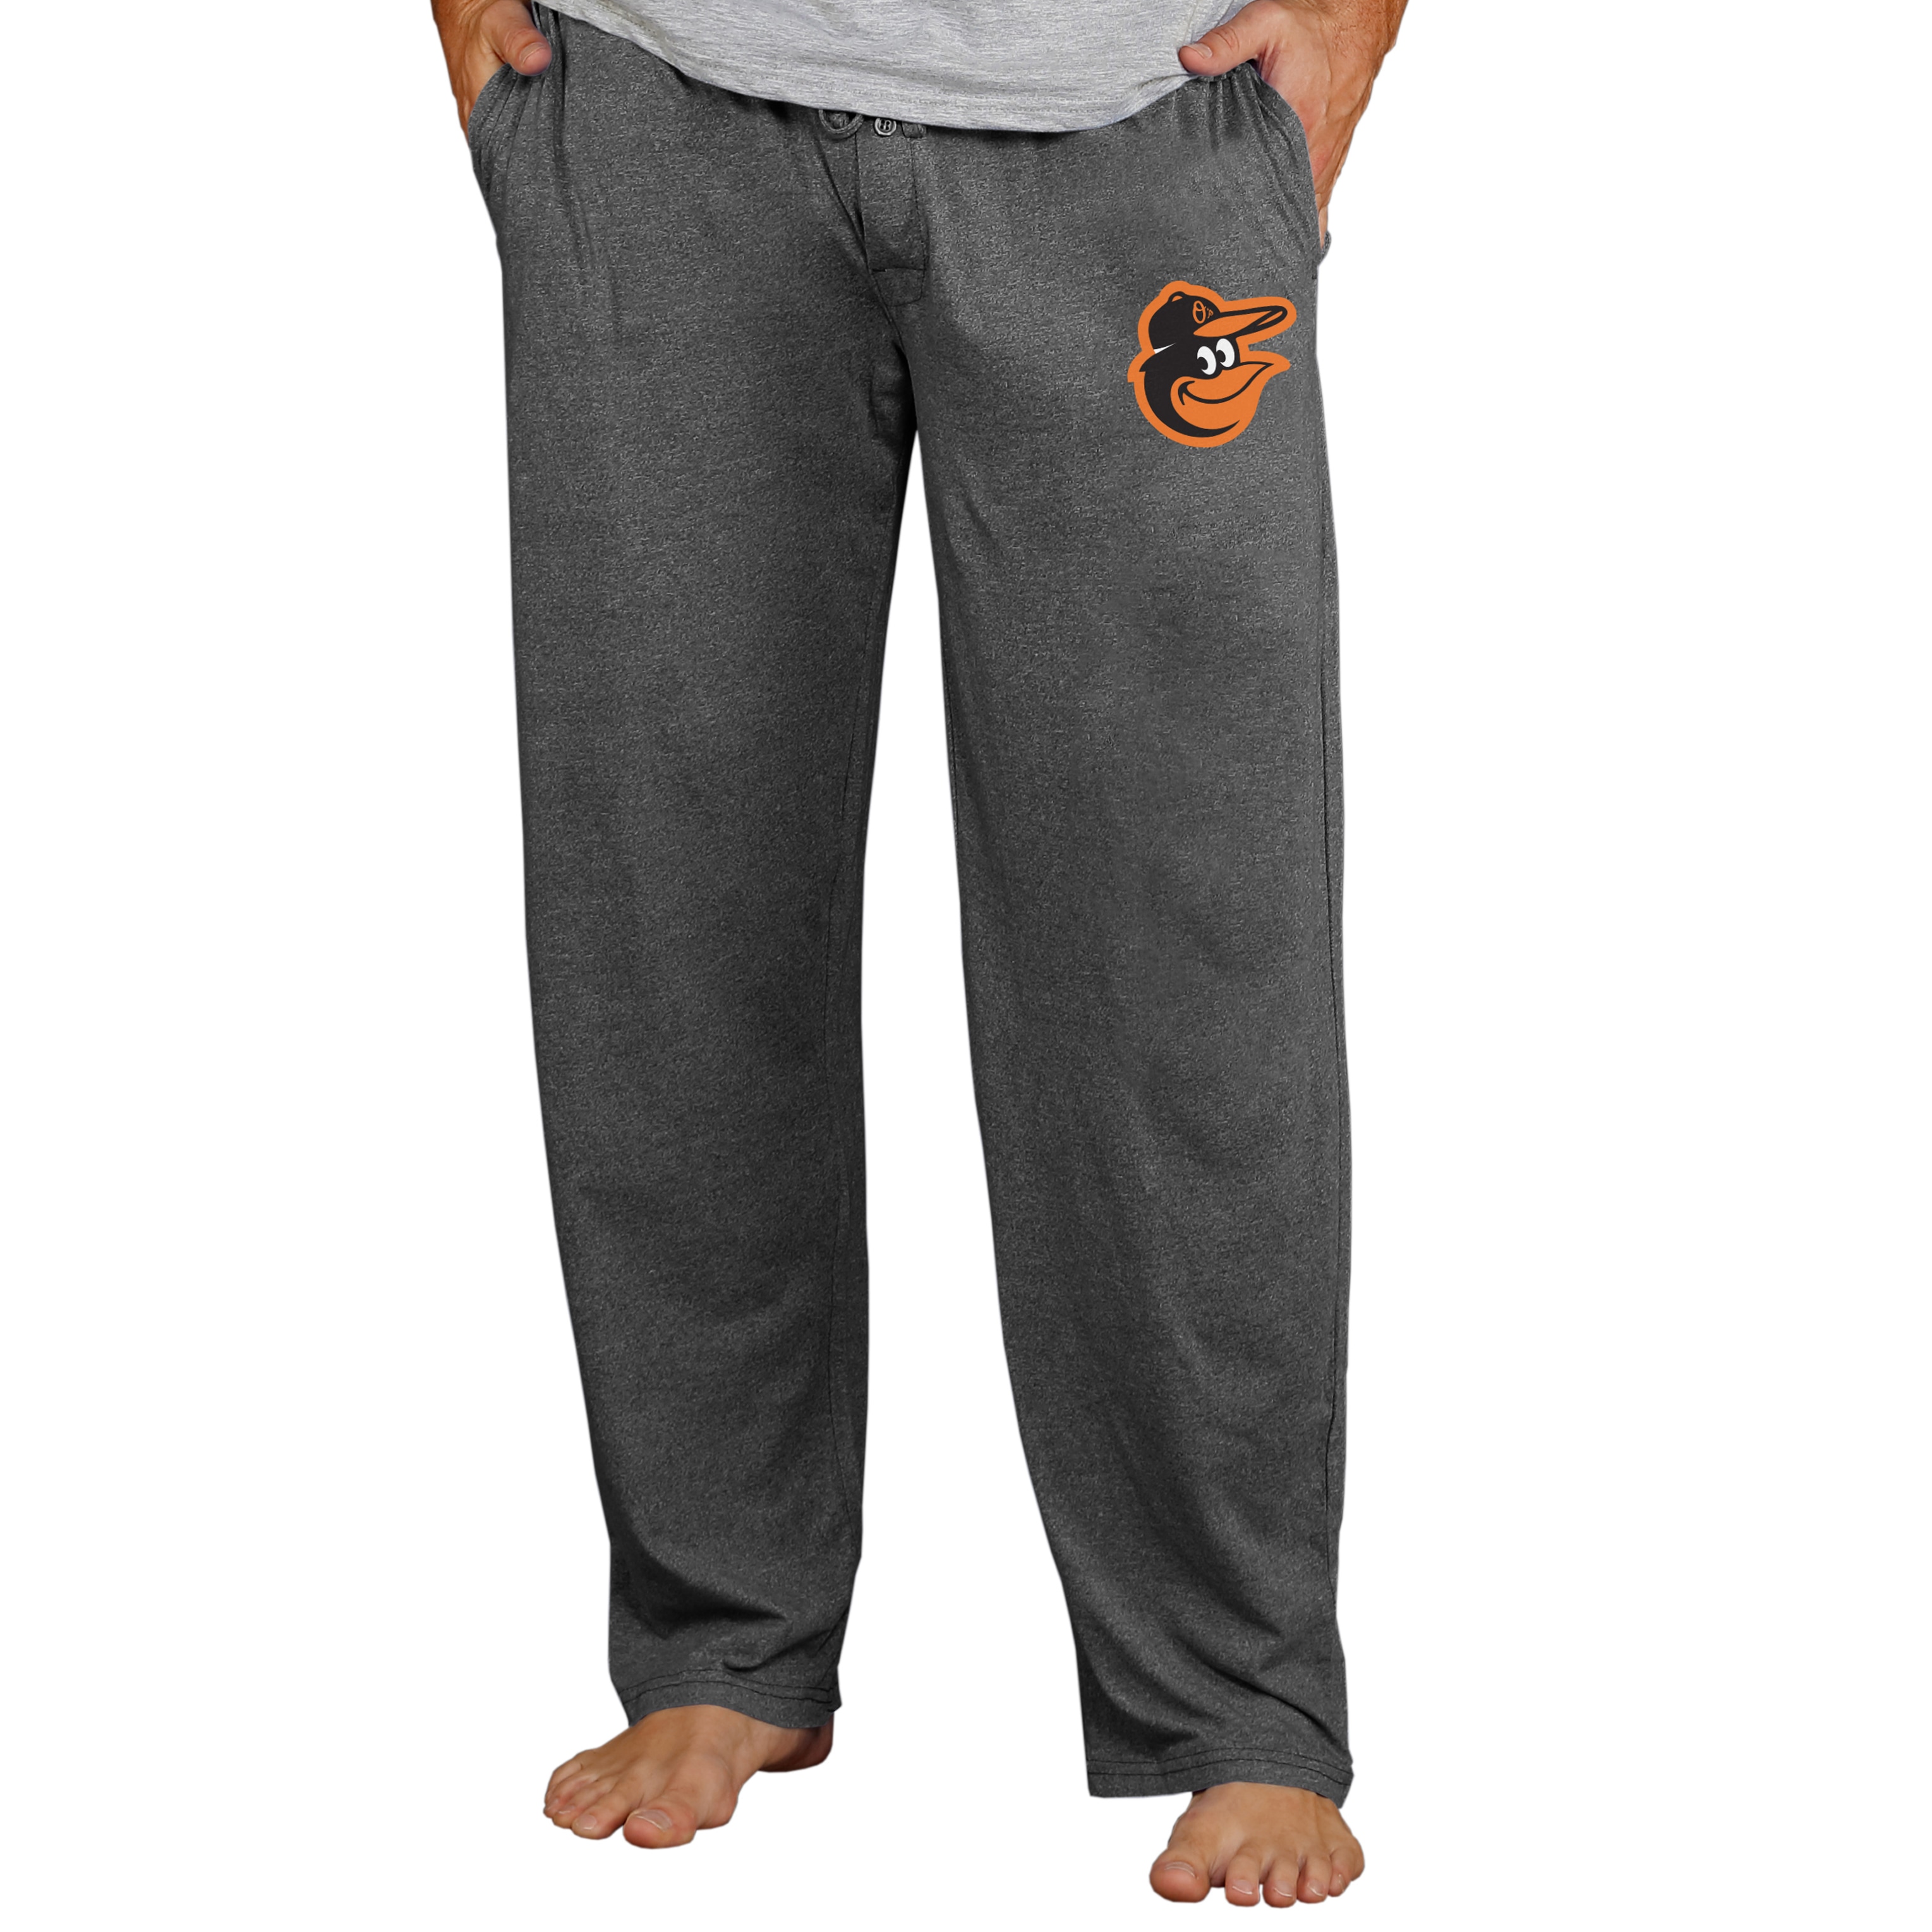 Men's Concepts Sport Charcoal Baltimore Orioles Quest Lounge Pants - image 1 of 1